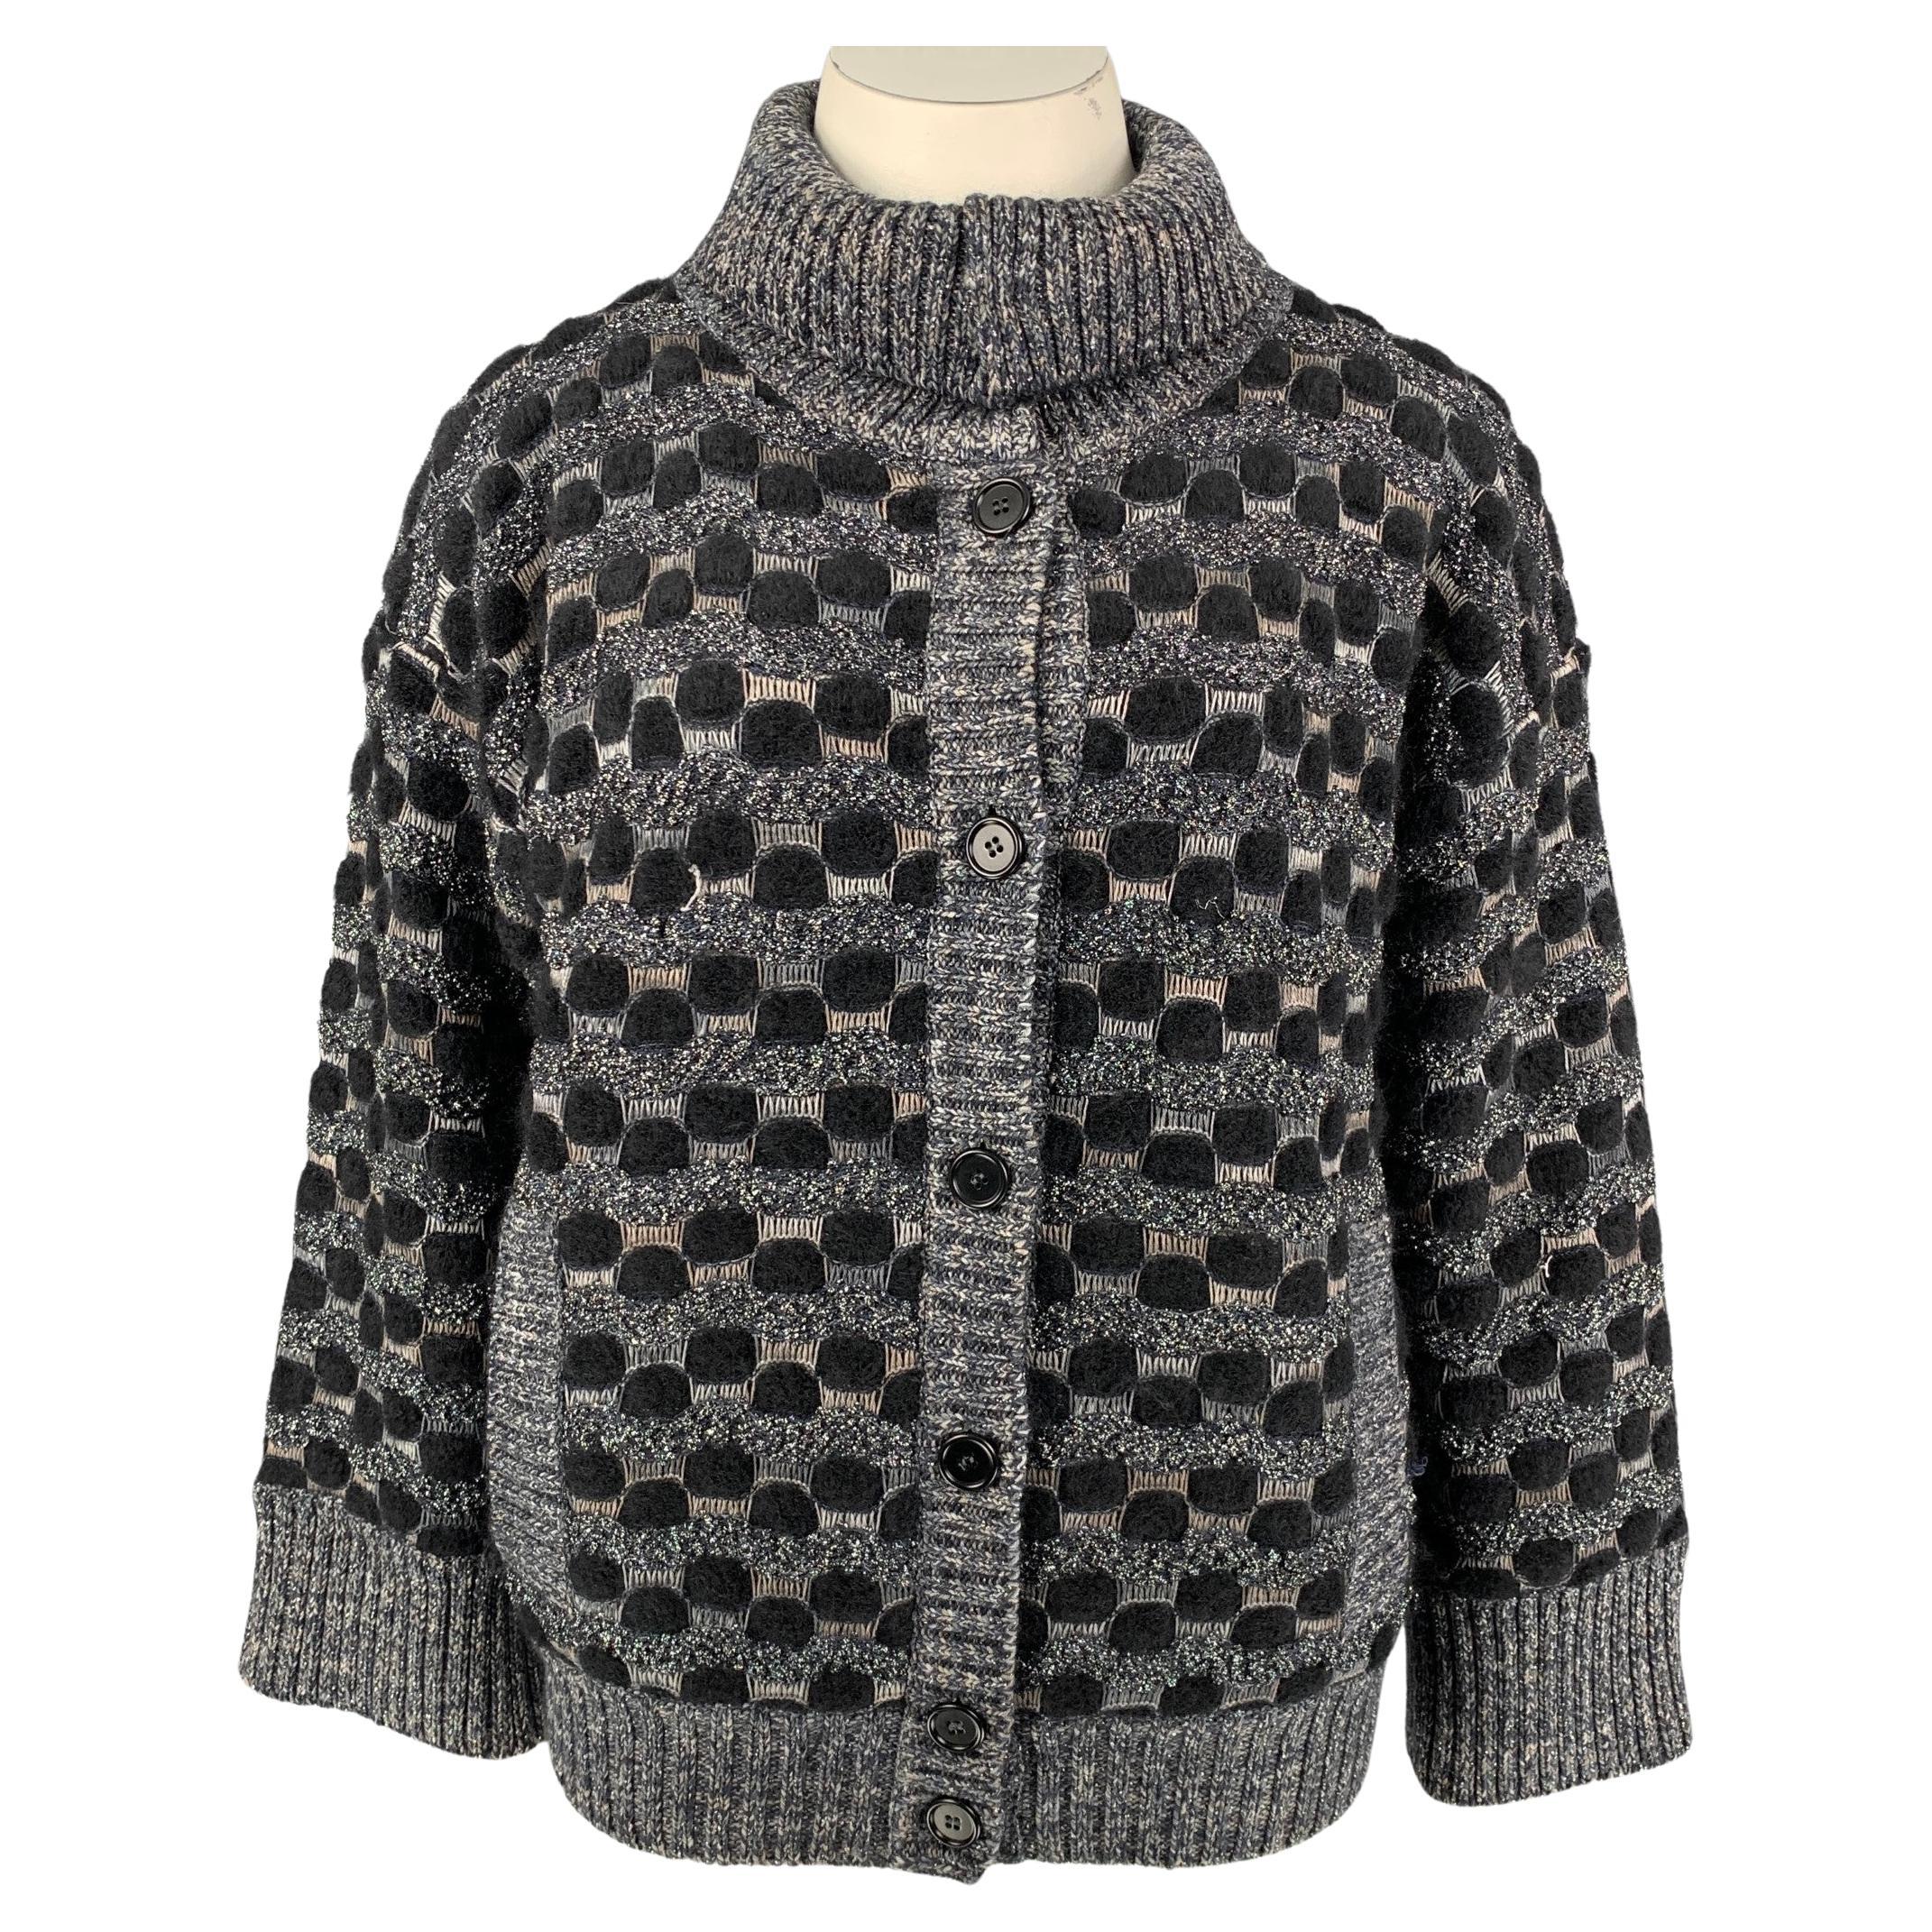 MISSONI Size 8 Black & Grey Knitted Wool Blend Jacket